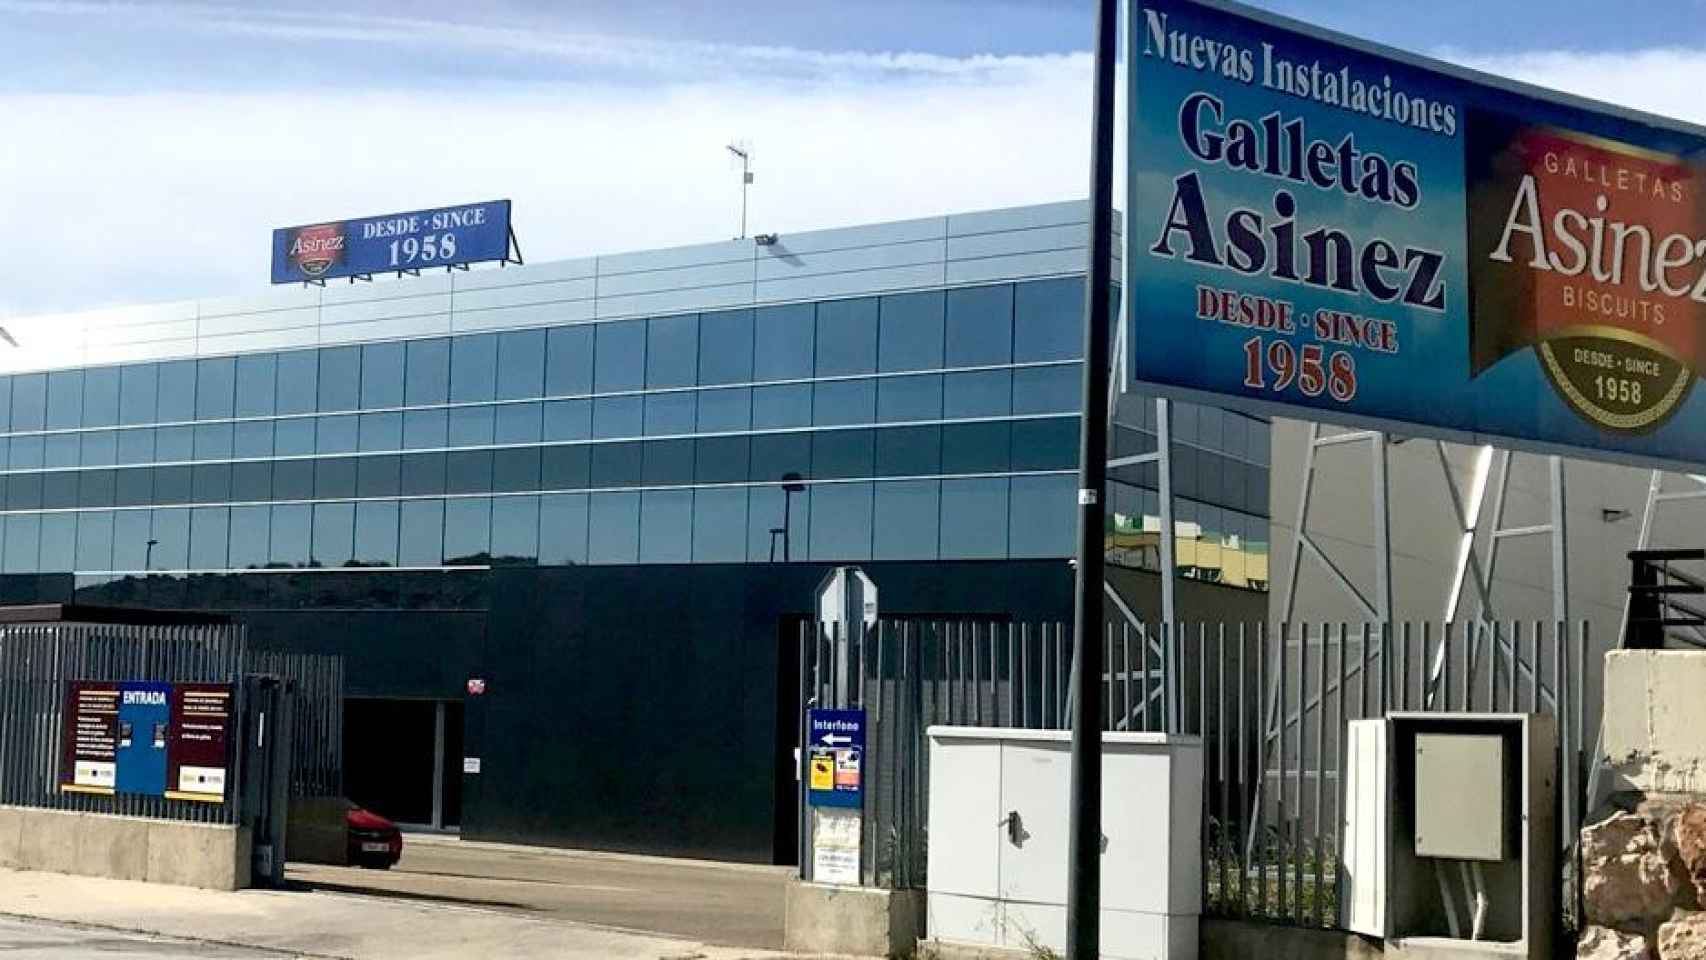 La fábrica de la empresa Galletas Asinez de Zaragoza